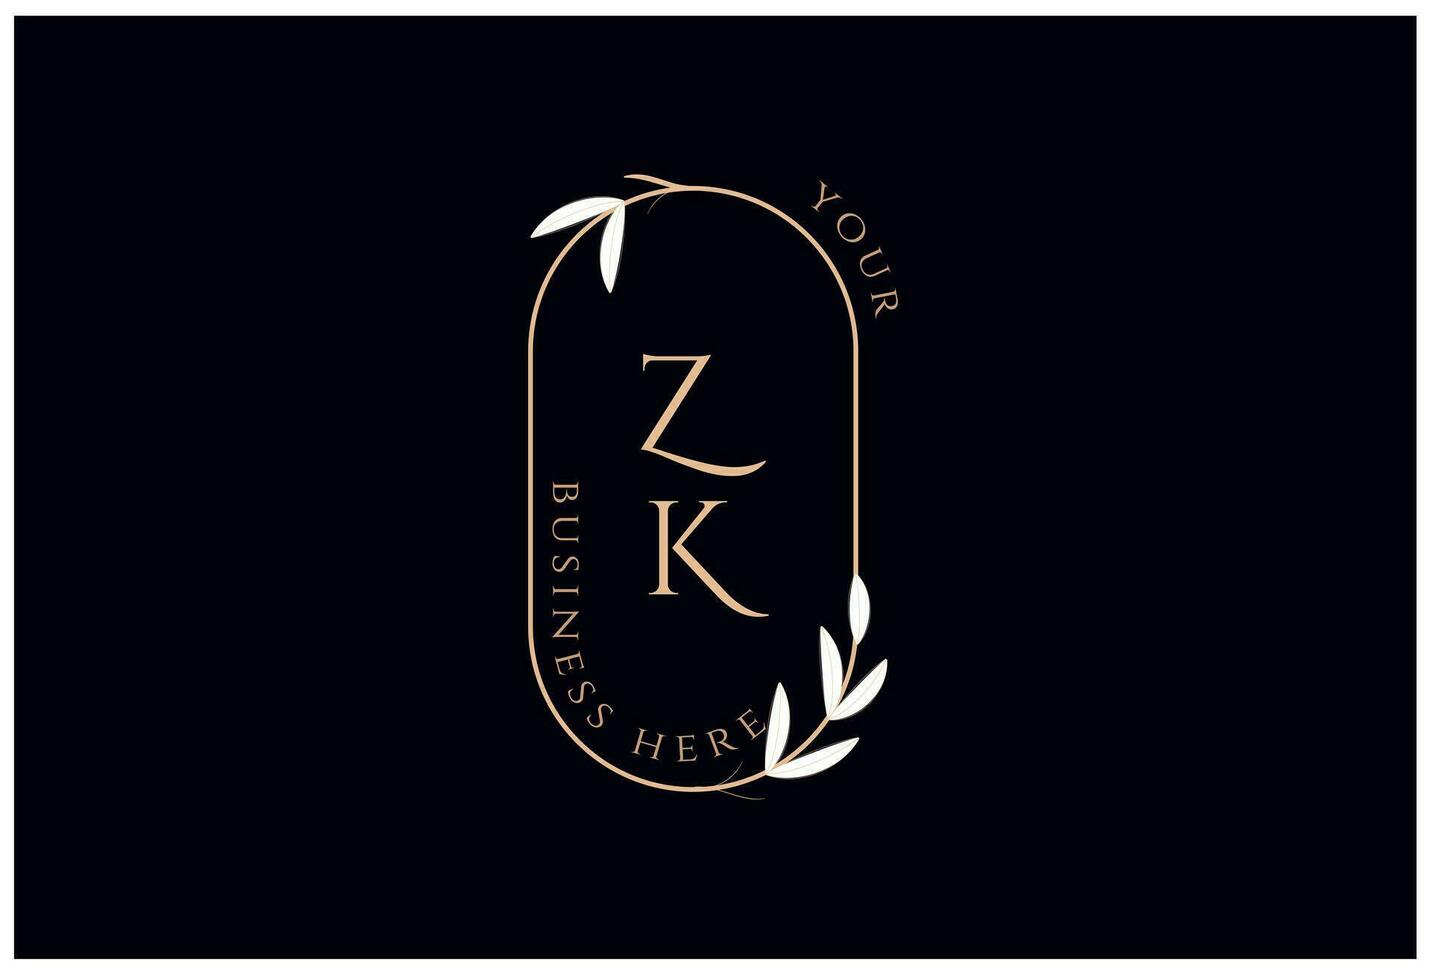 zk vector logo con Boda ceremonia para marca diseño